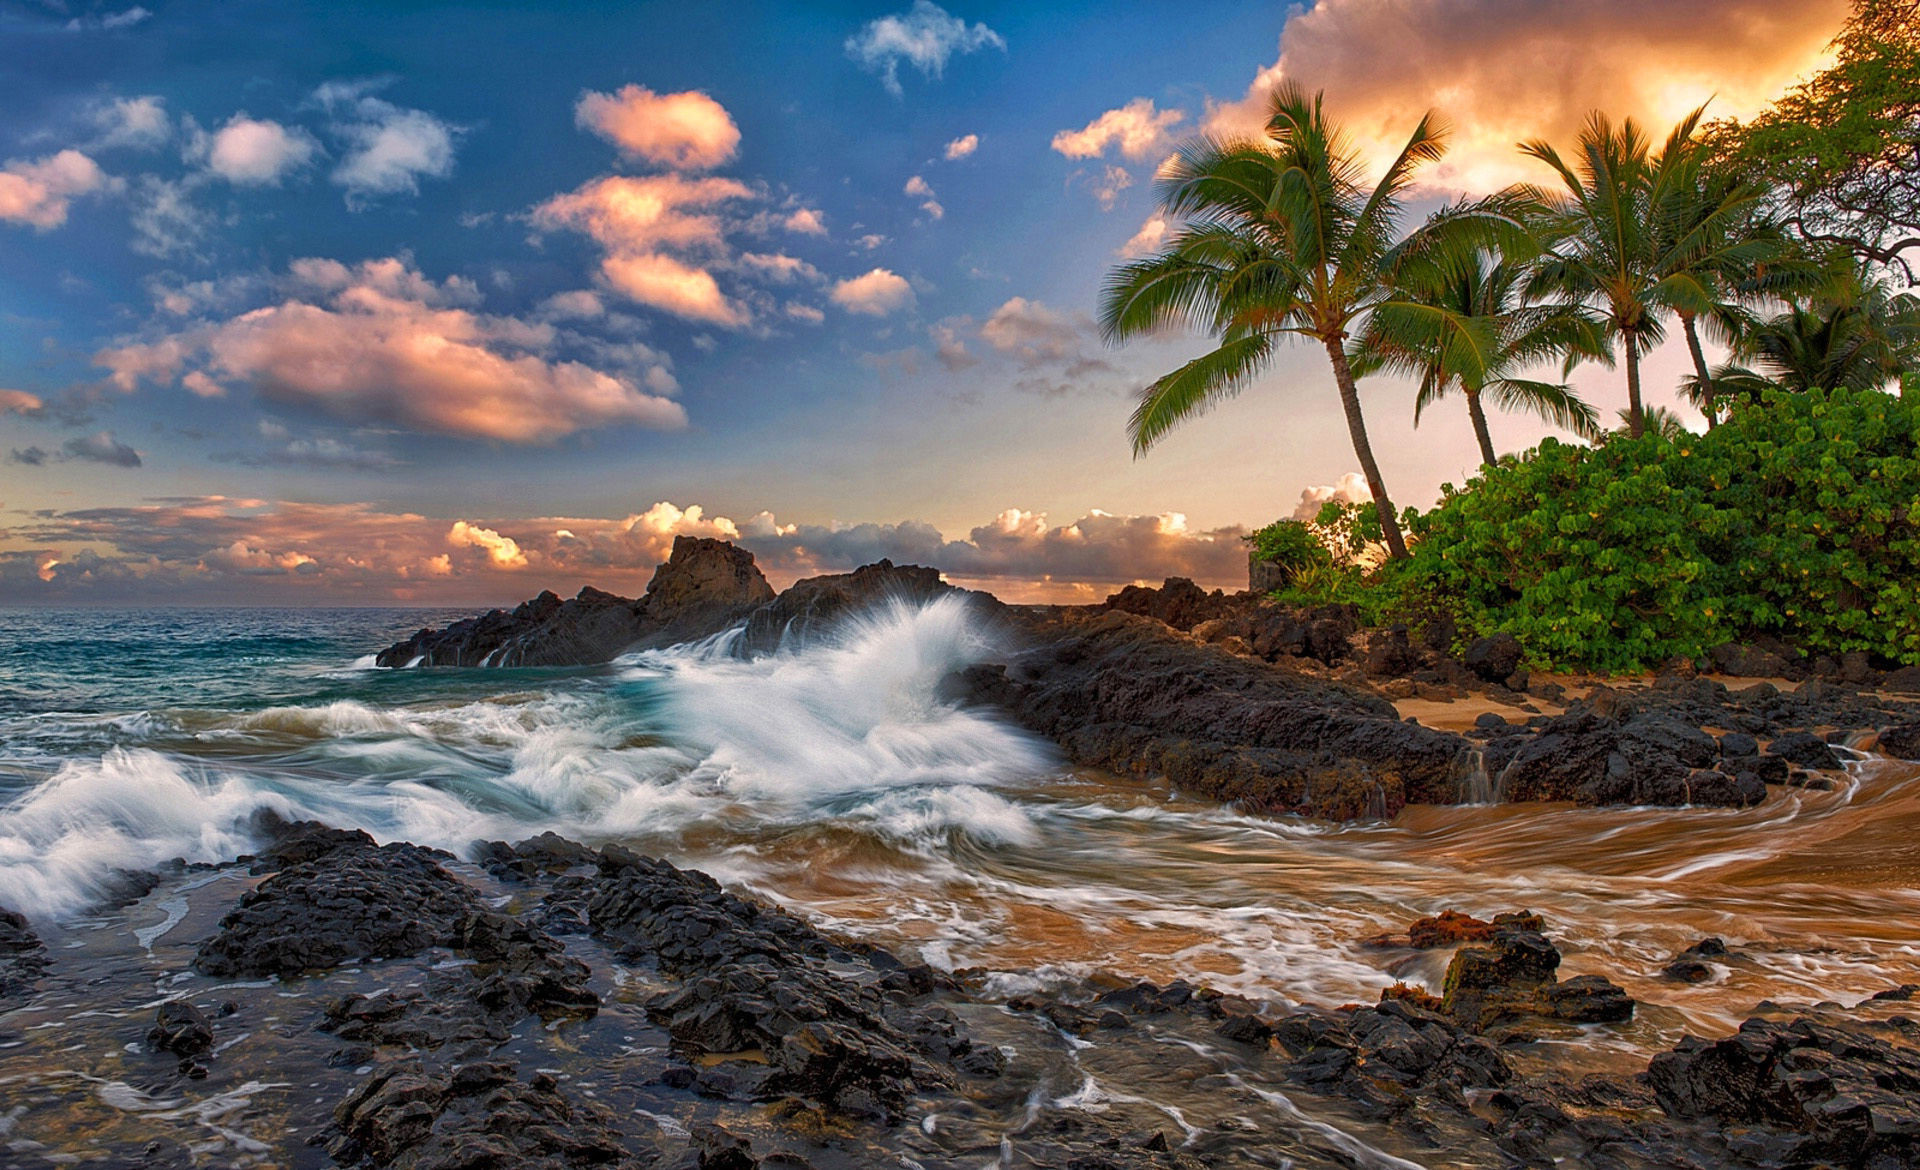 1920x1170 Beautiful Beach in Maui - hdr - Beaches Wallpaper ID 1877760 - Desktop  Nexus Nature